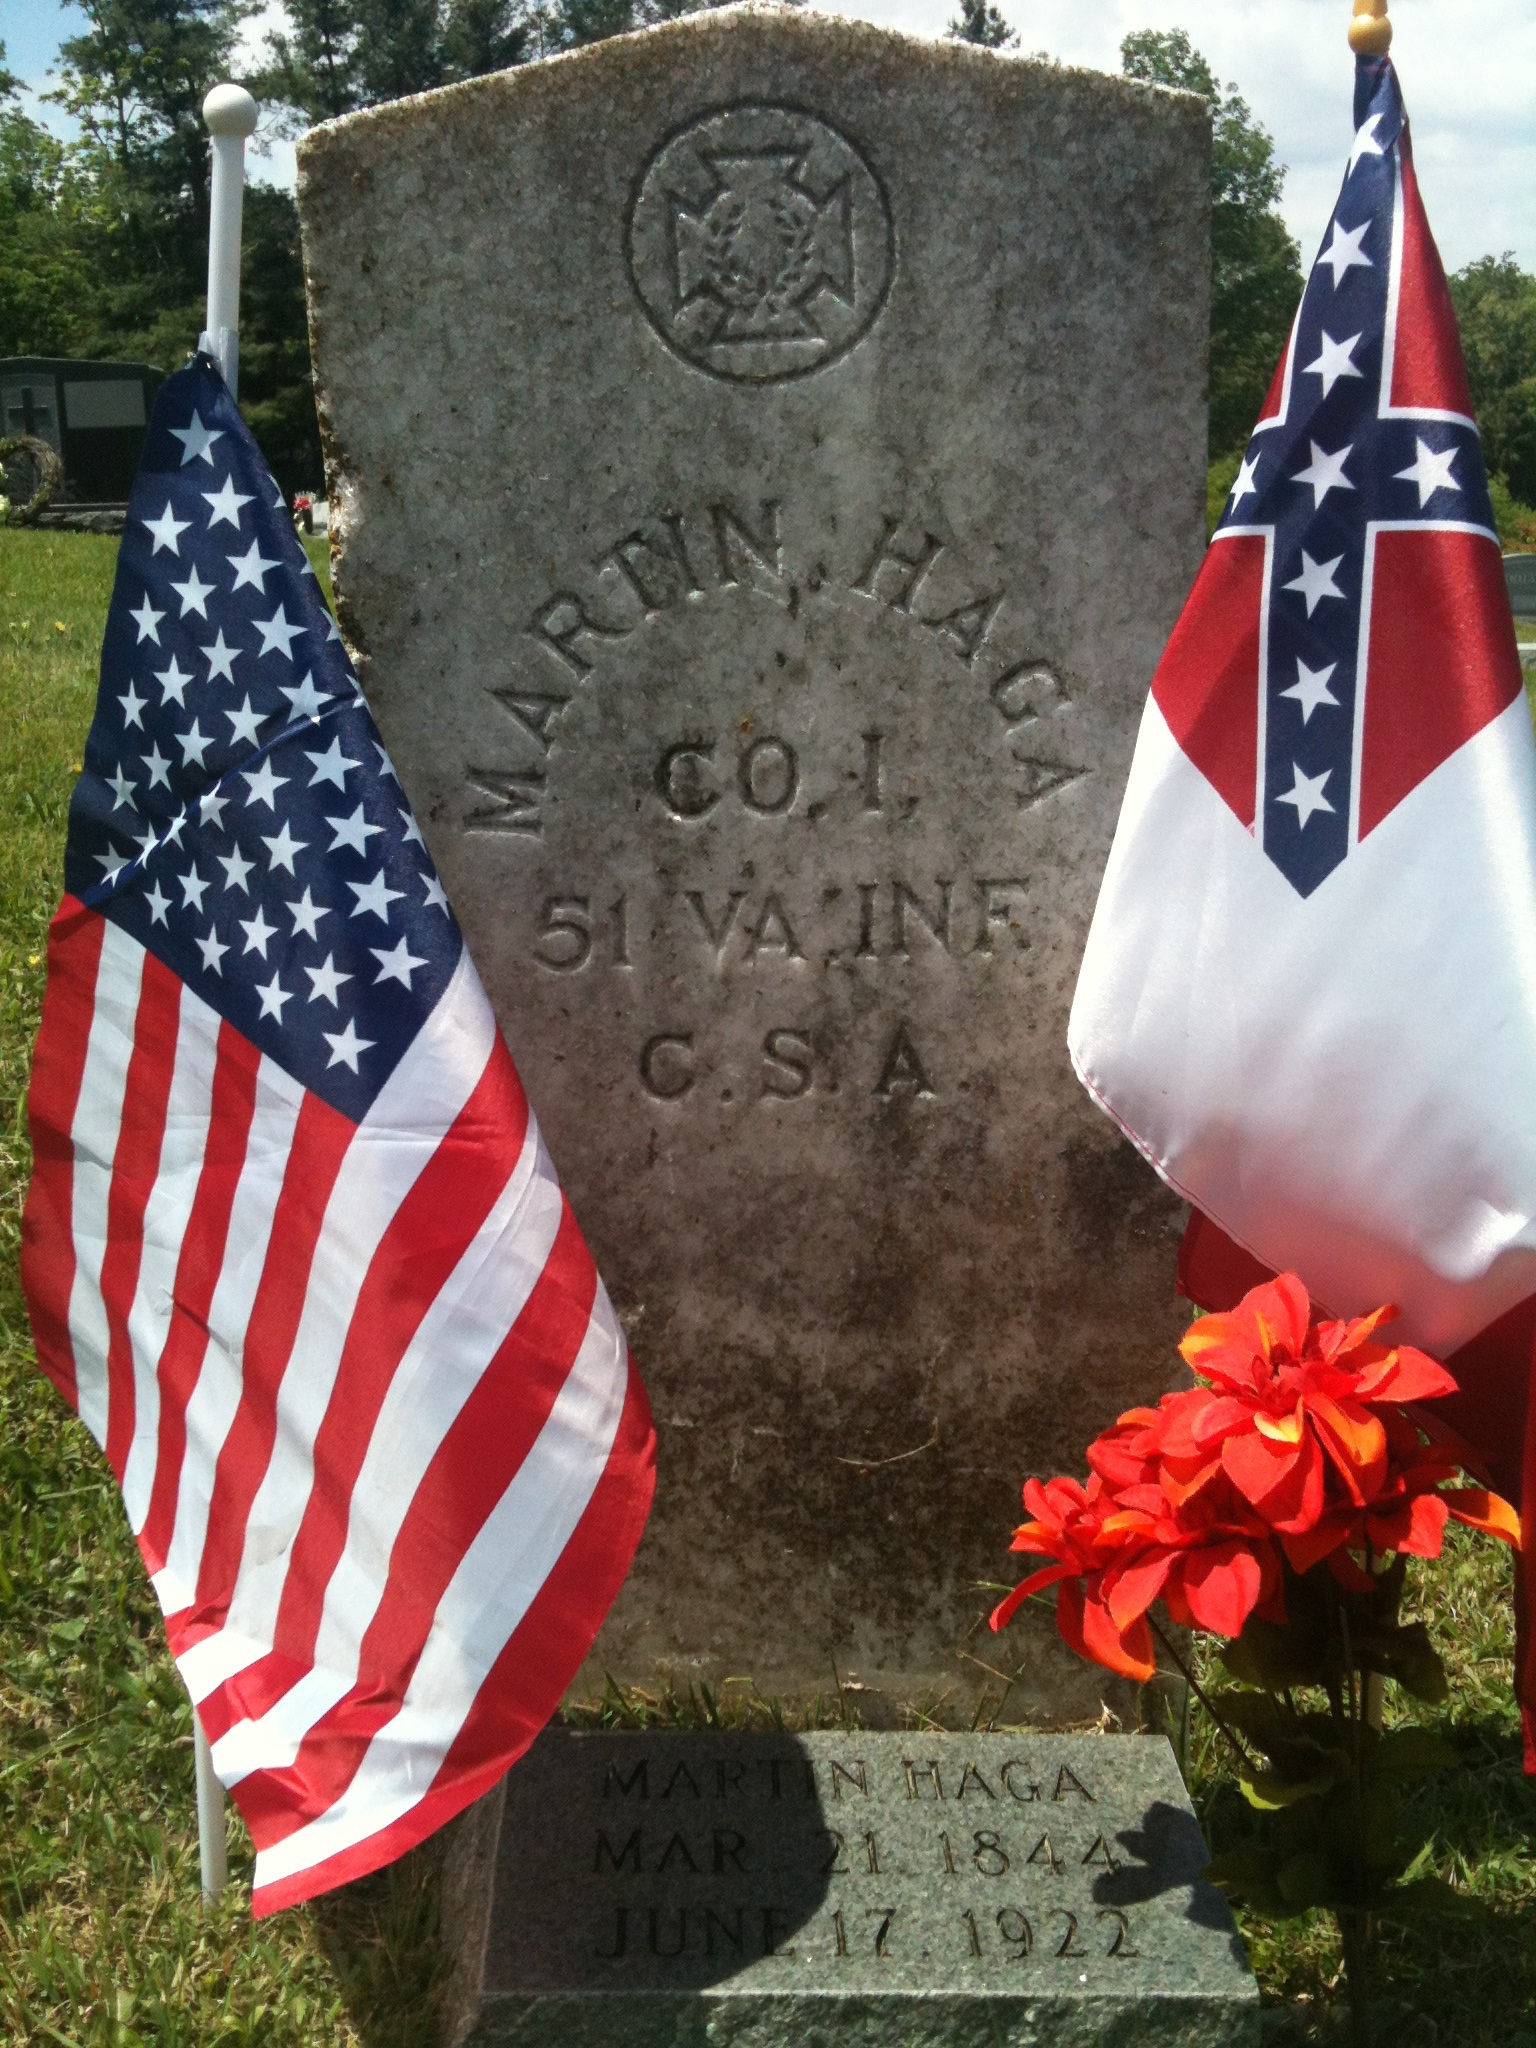 Martin Haga (Confederate Veteran - Co. I, 51 Virginia Infantry)